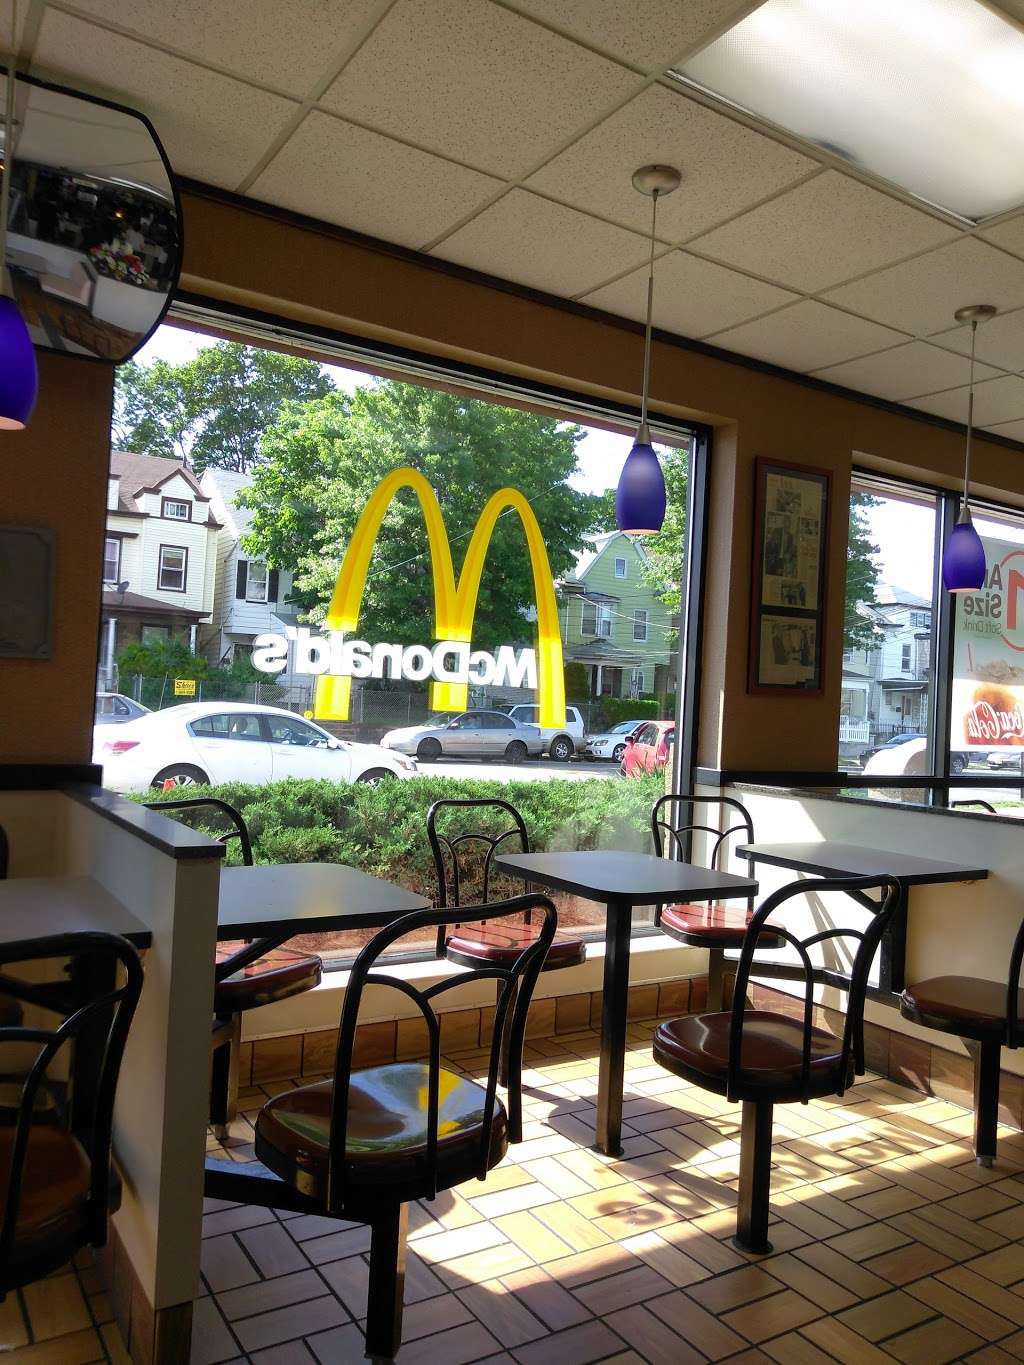 McDonalds | 485-497, Broadway, Paterson, NJ 07514 | Phone: (973) 278-4710